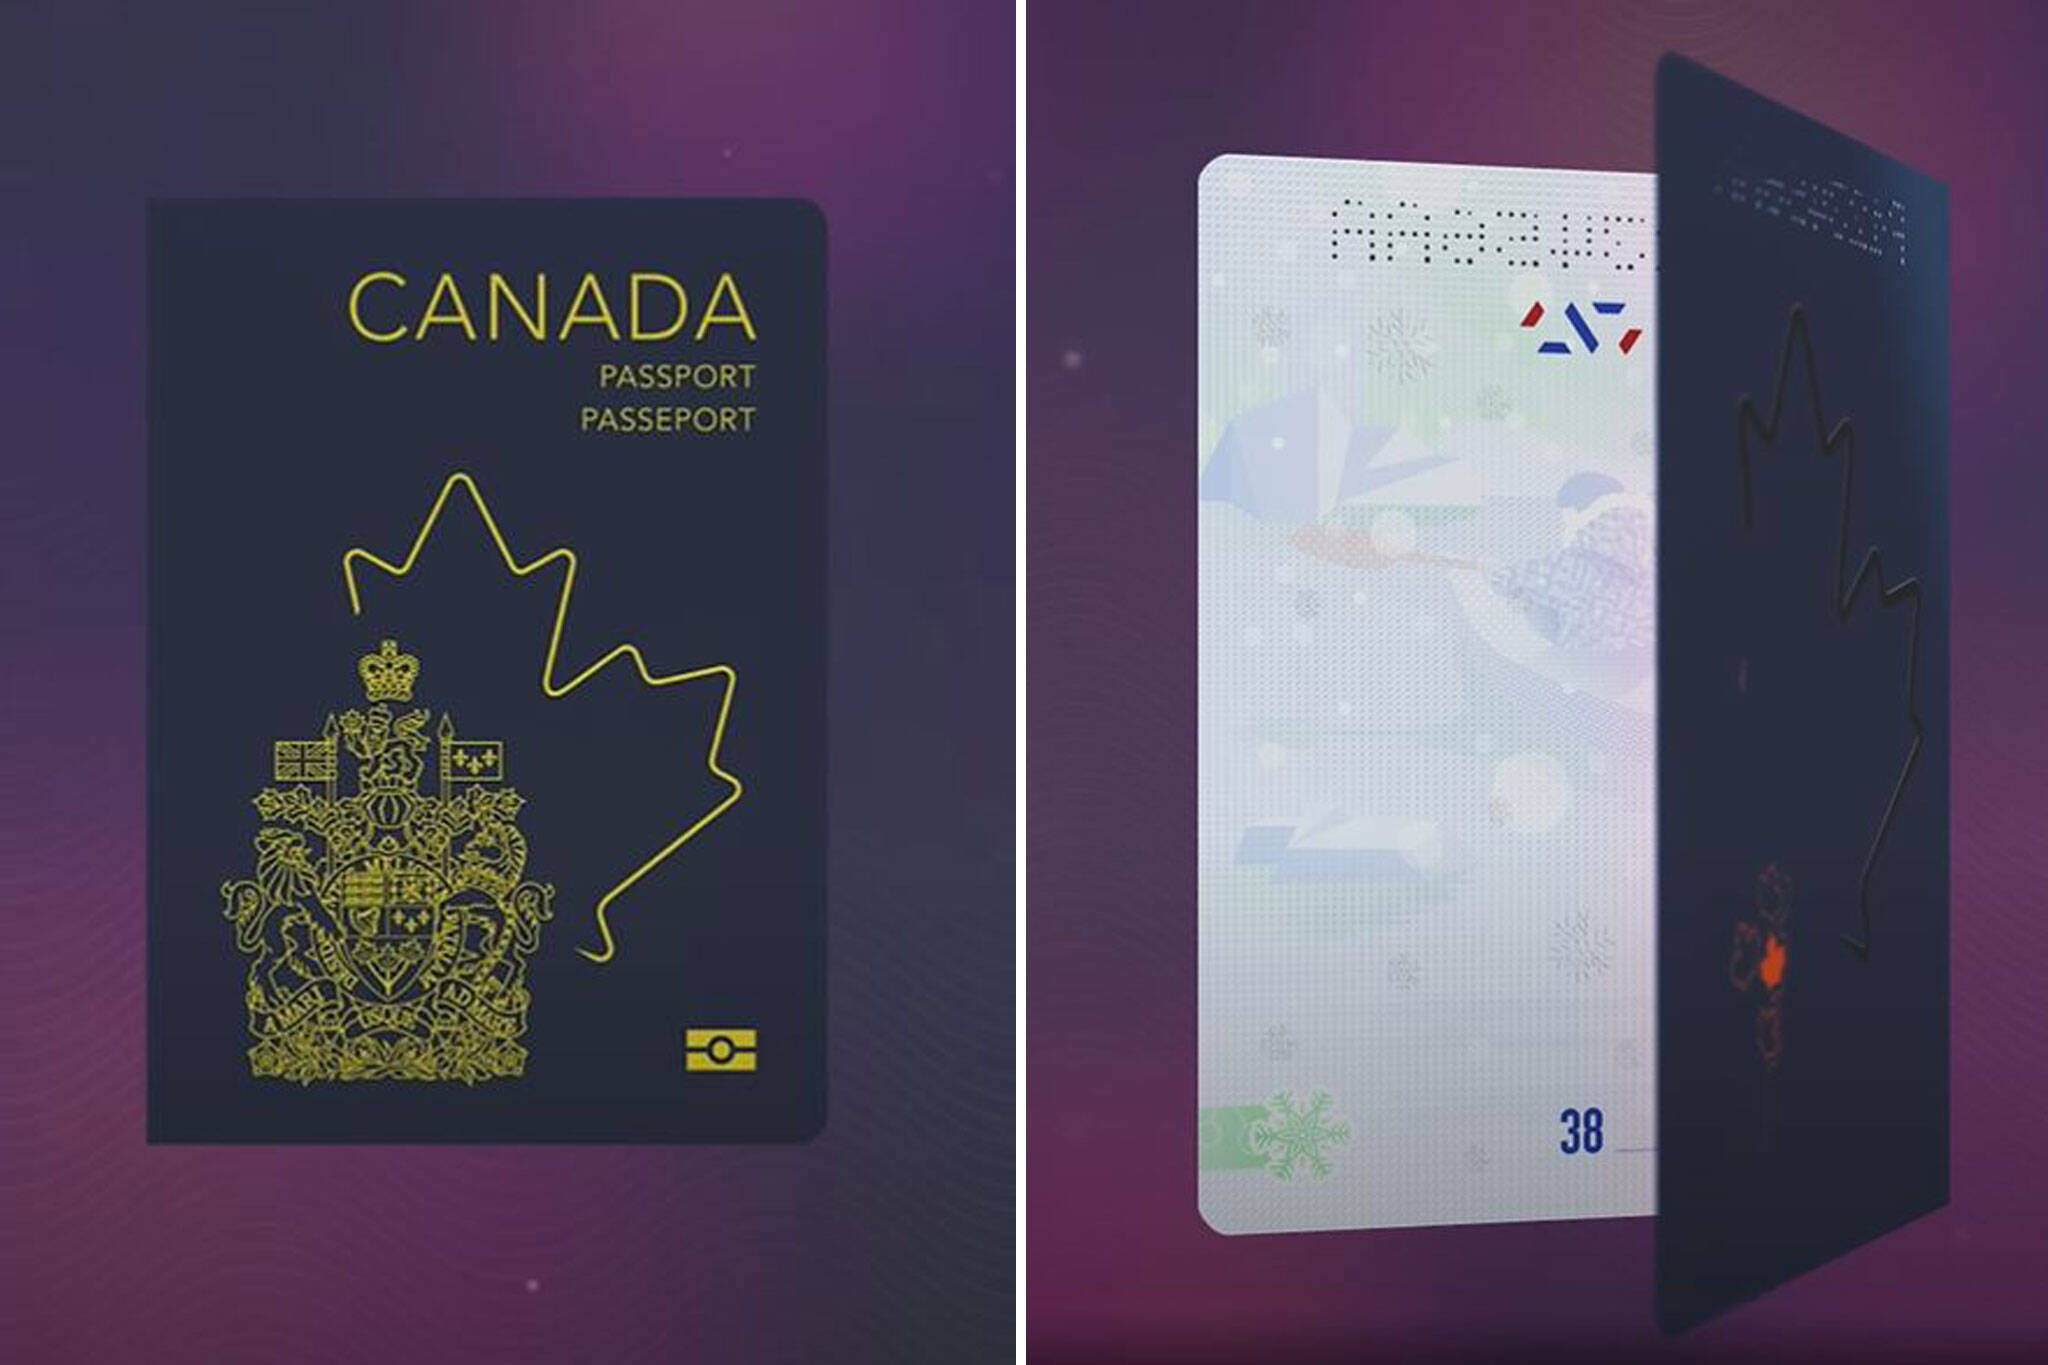 Canada's new passport design already has people furious